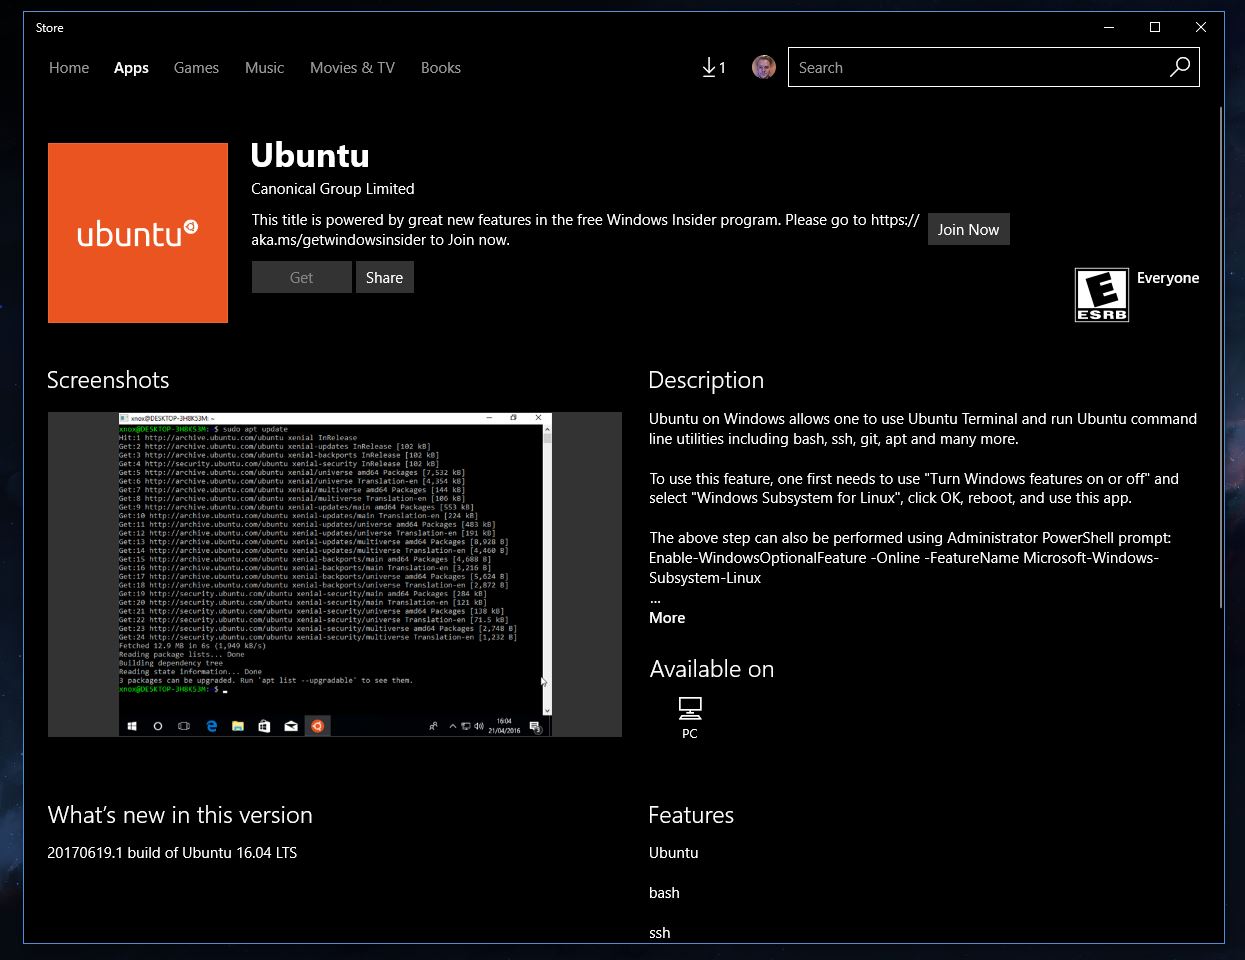 Ubuntu comes to the Windows Store